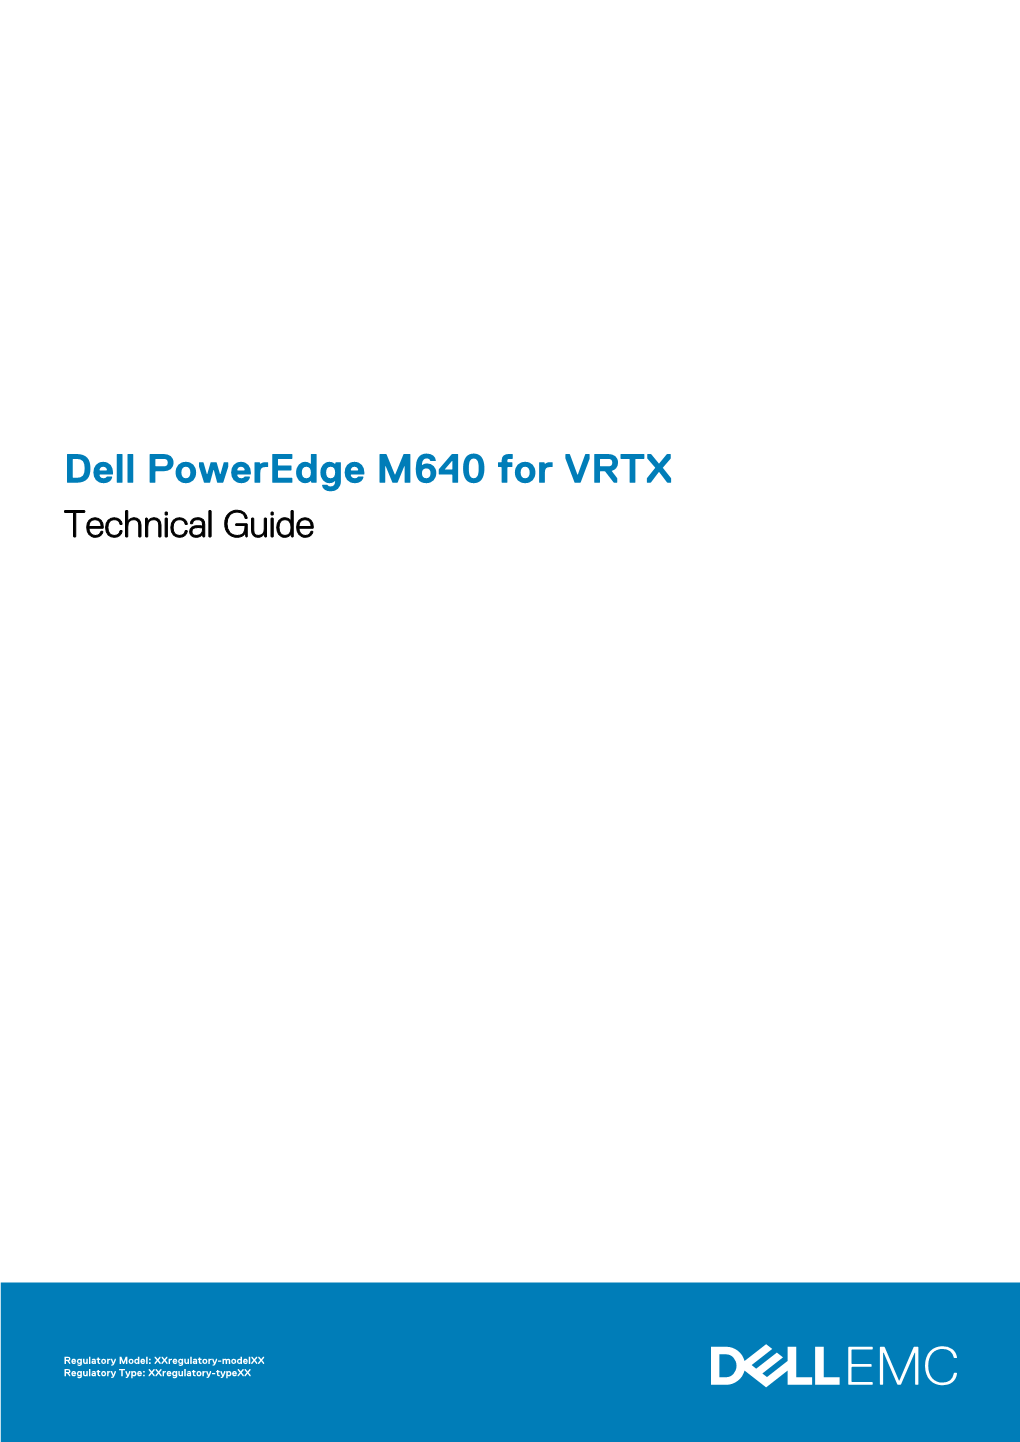 Dell Poweredge M640 for VRTX Technical Guide